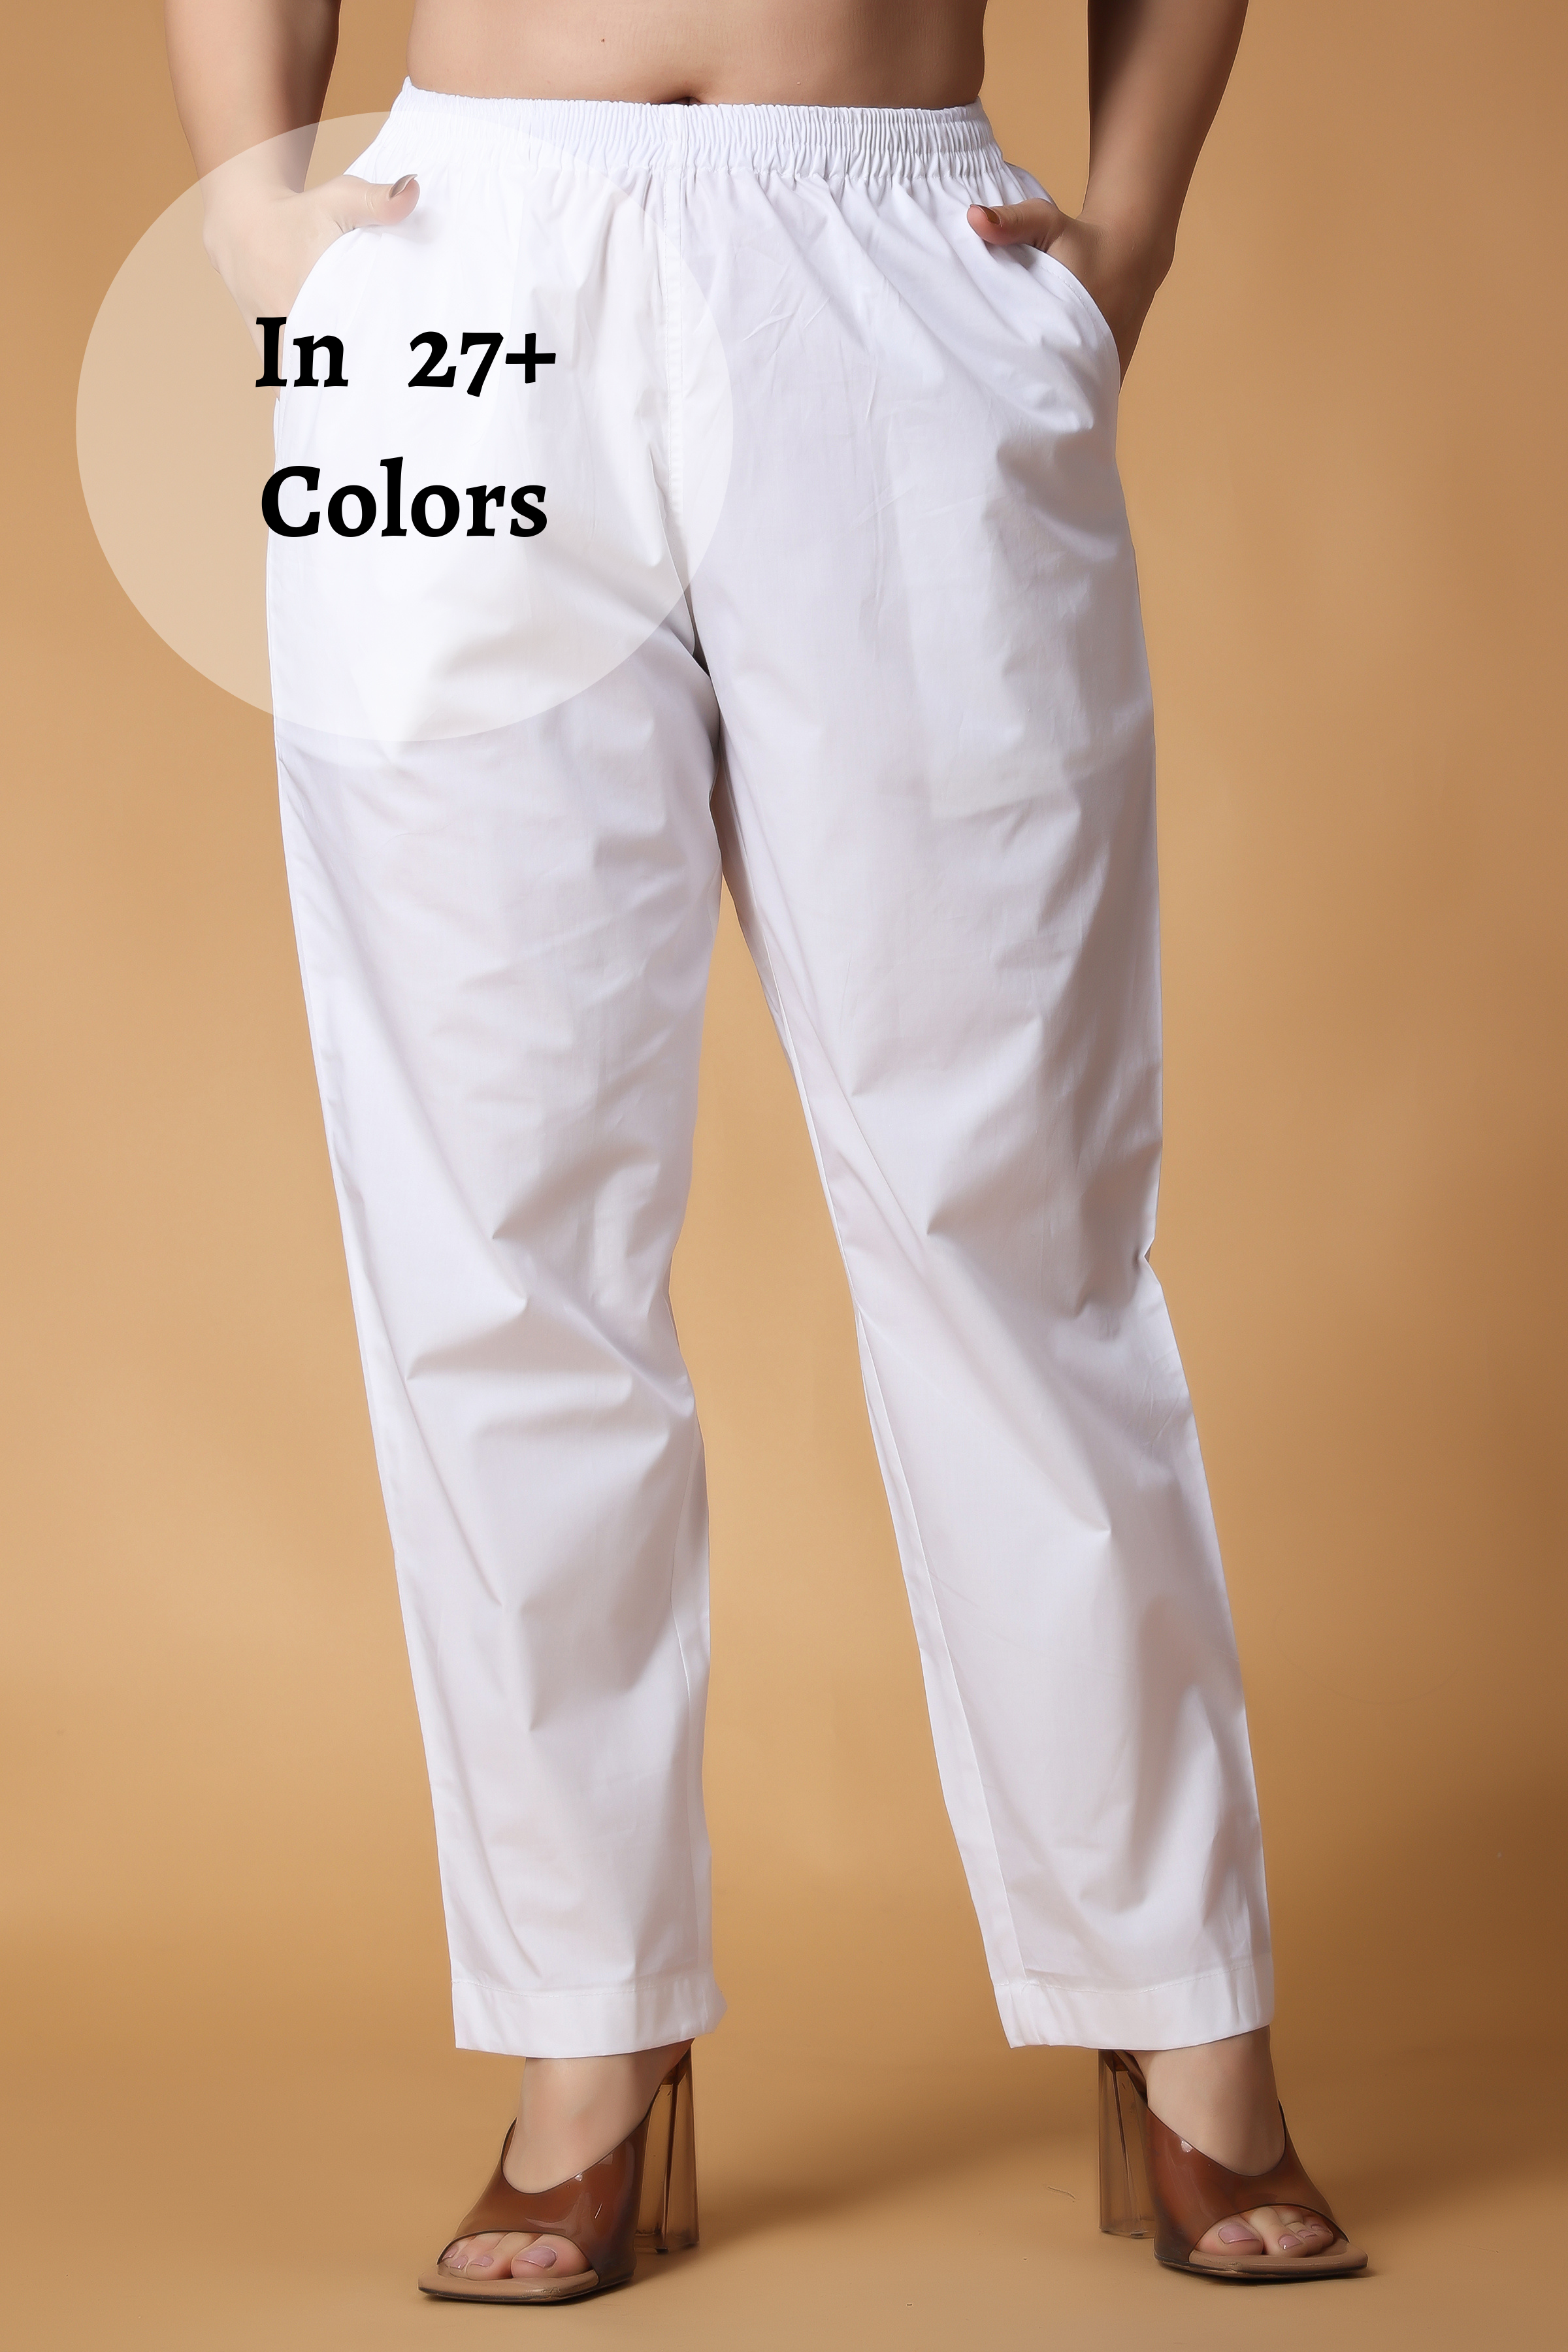 Buy tbase Mens Olive Solid Cargo Pants for Men Online India